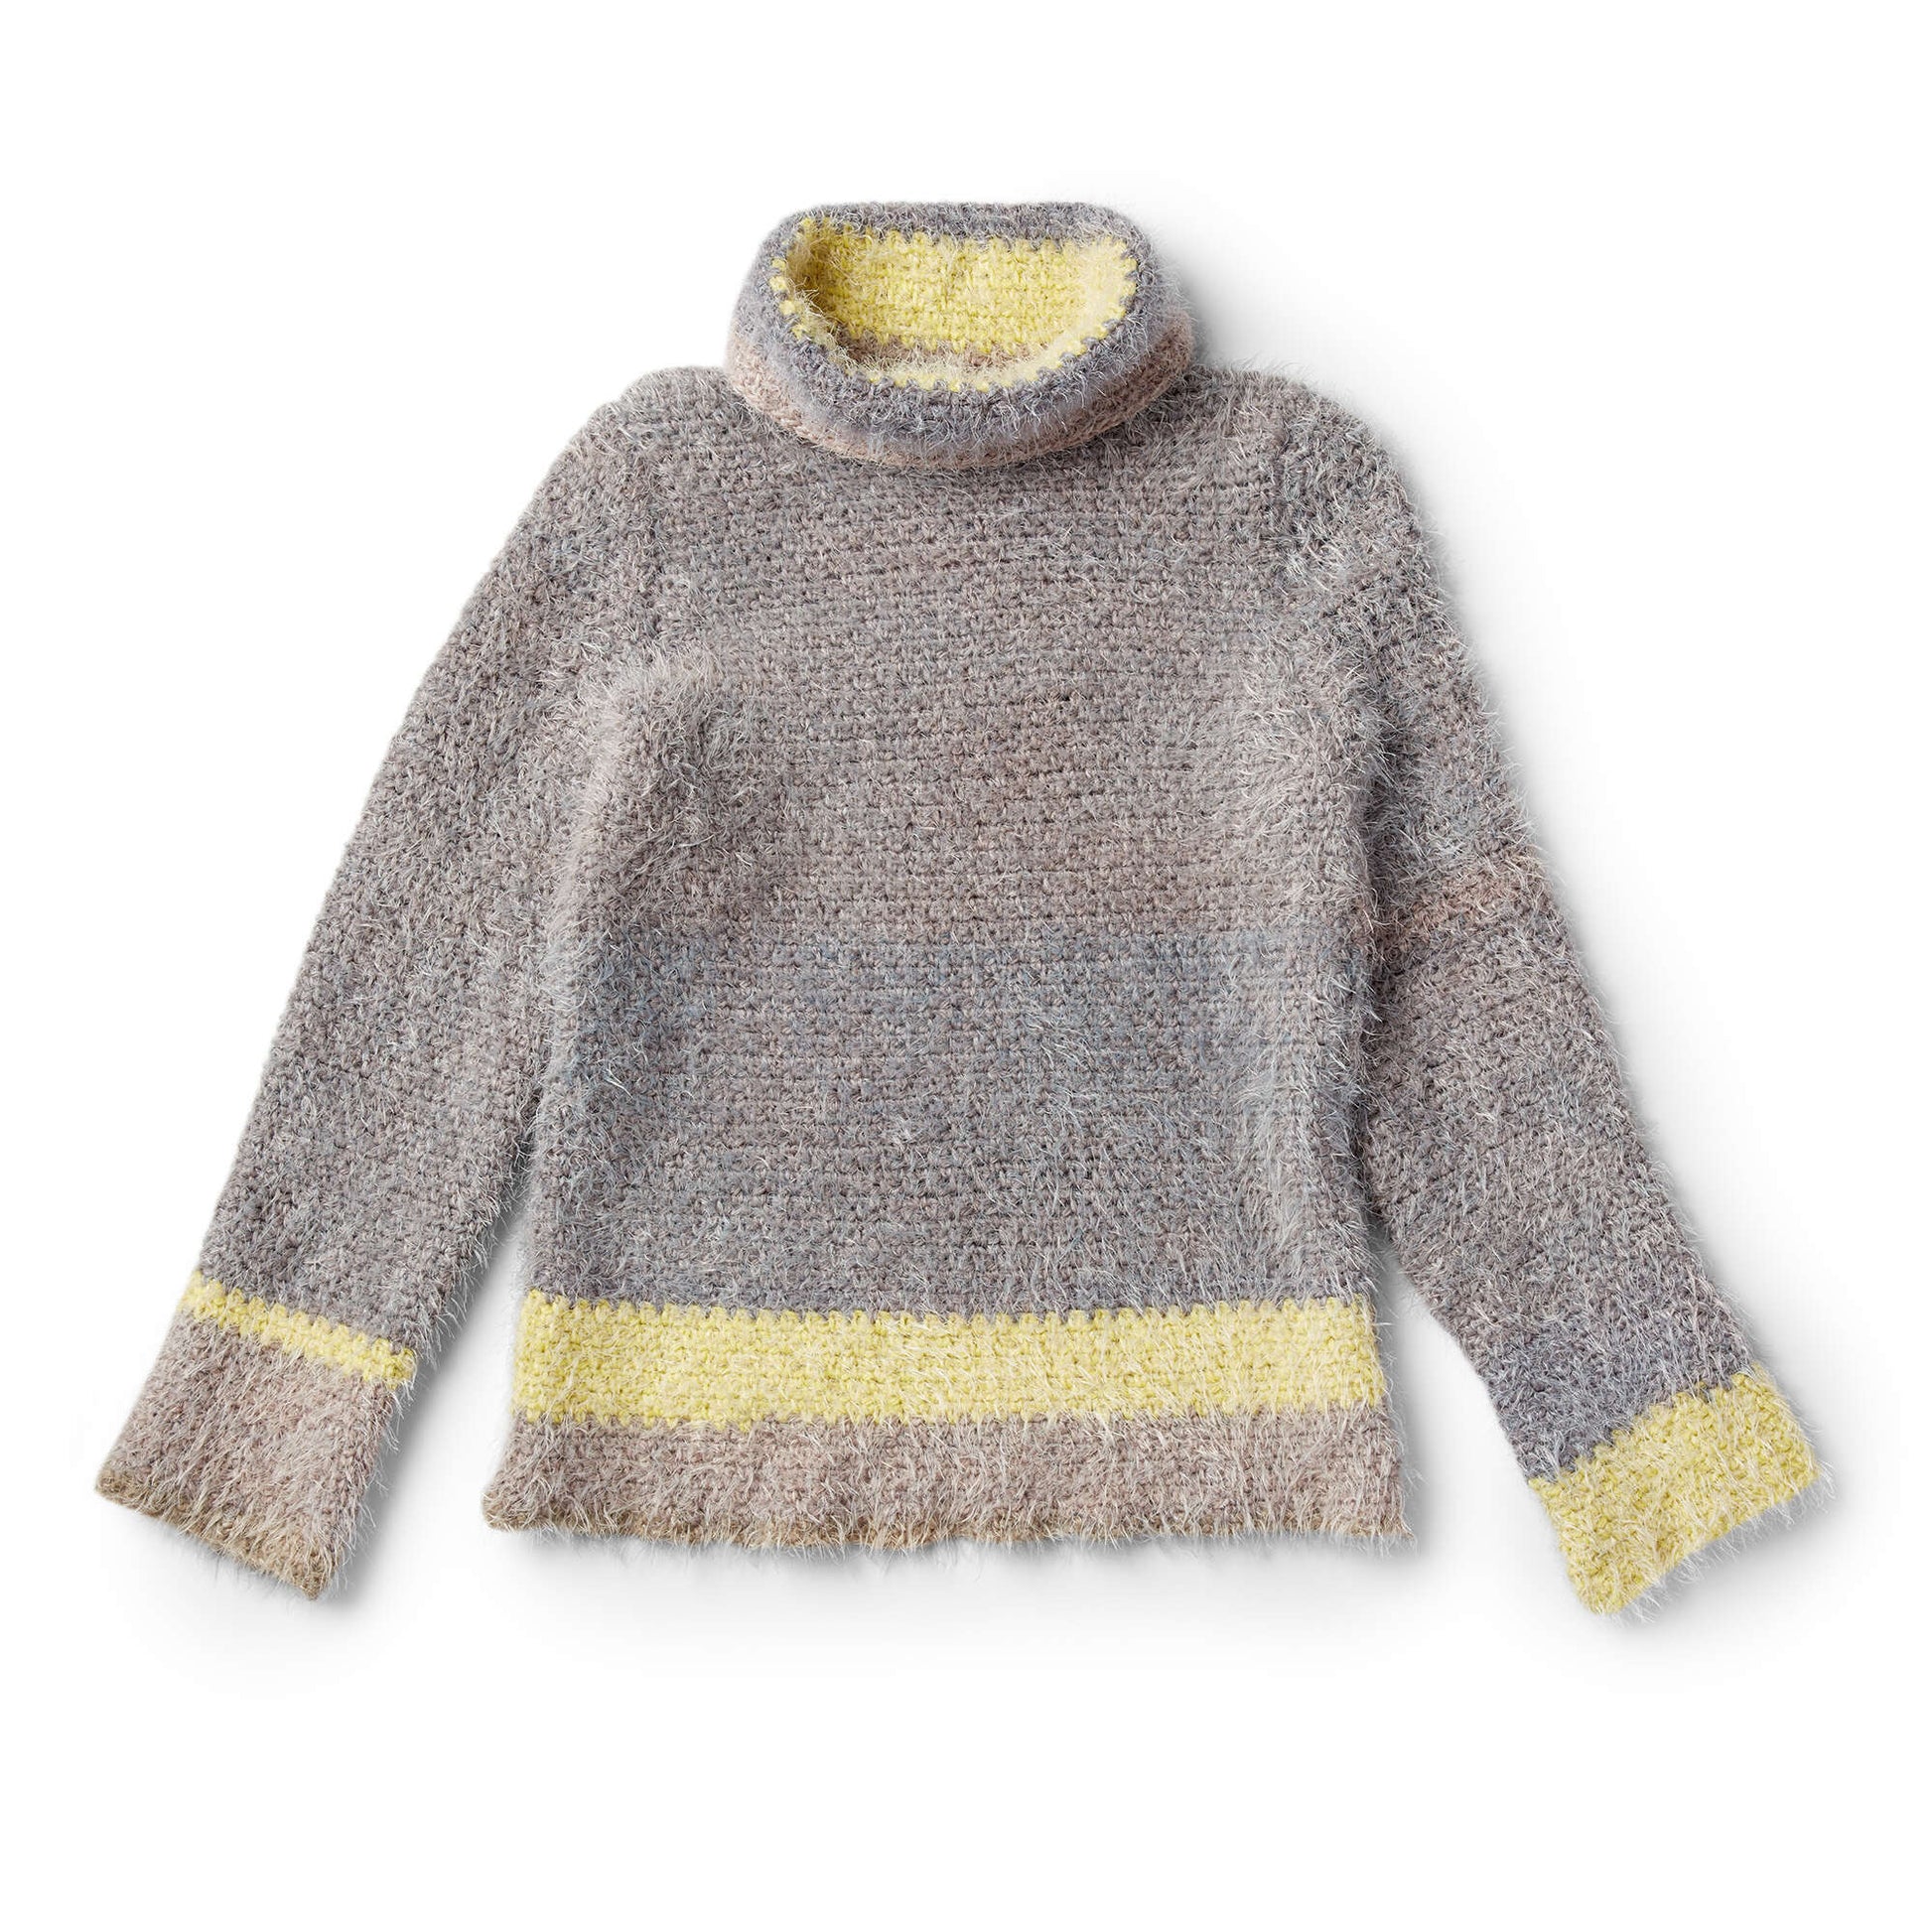 Free Caron Crochet Cowl Neck Sweater Pattern